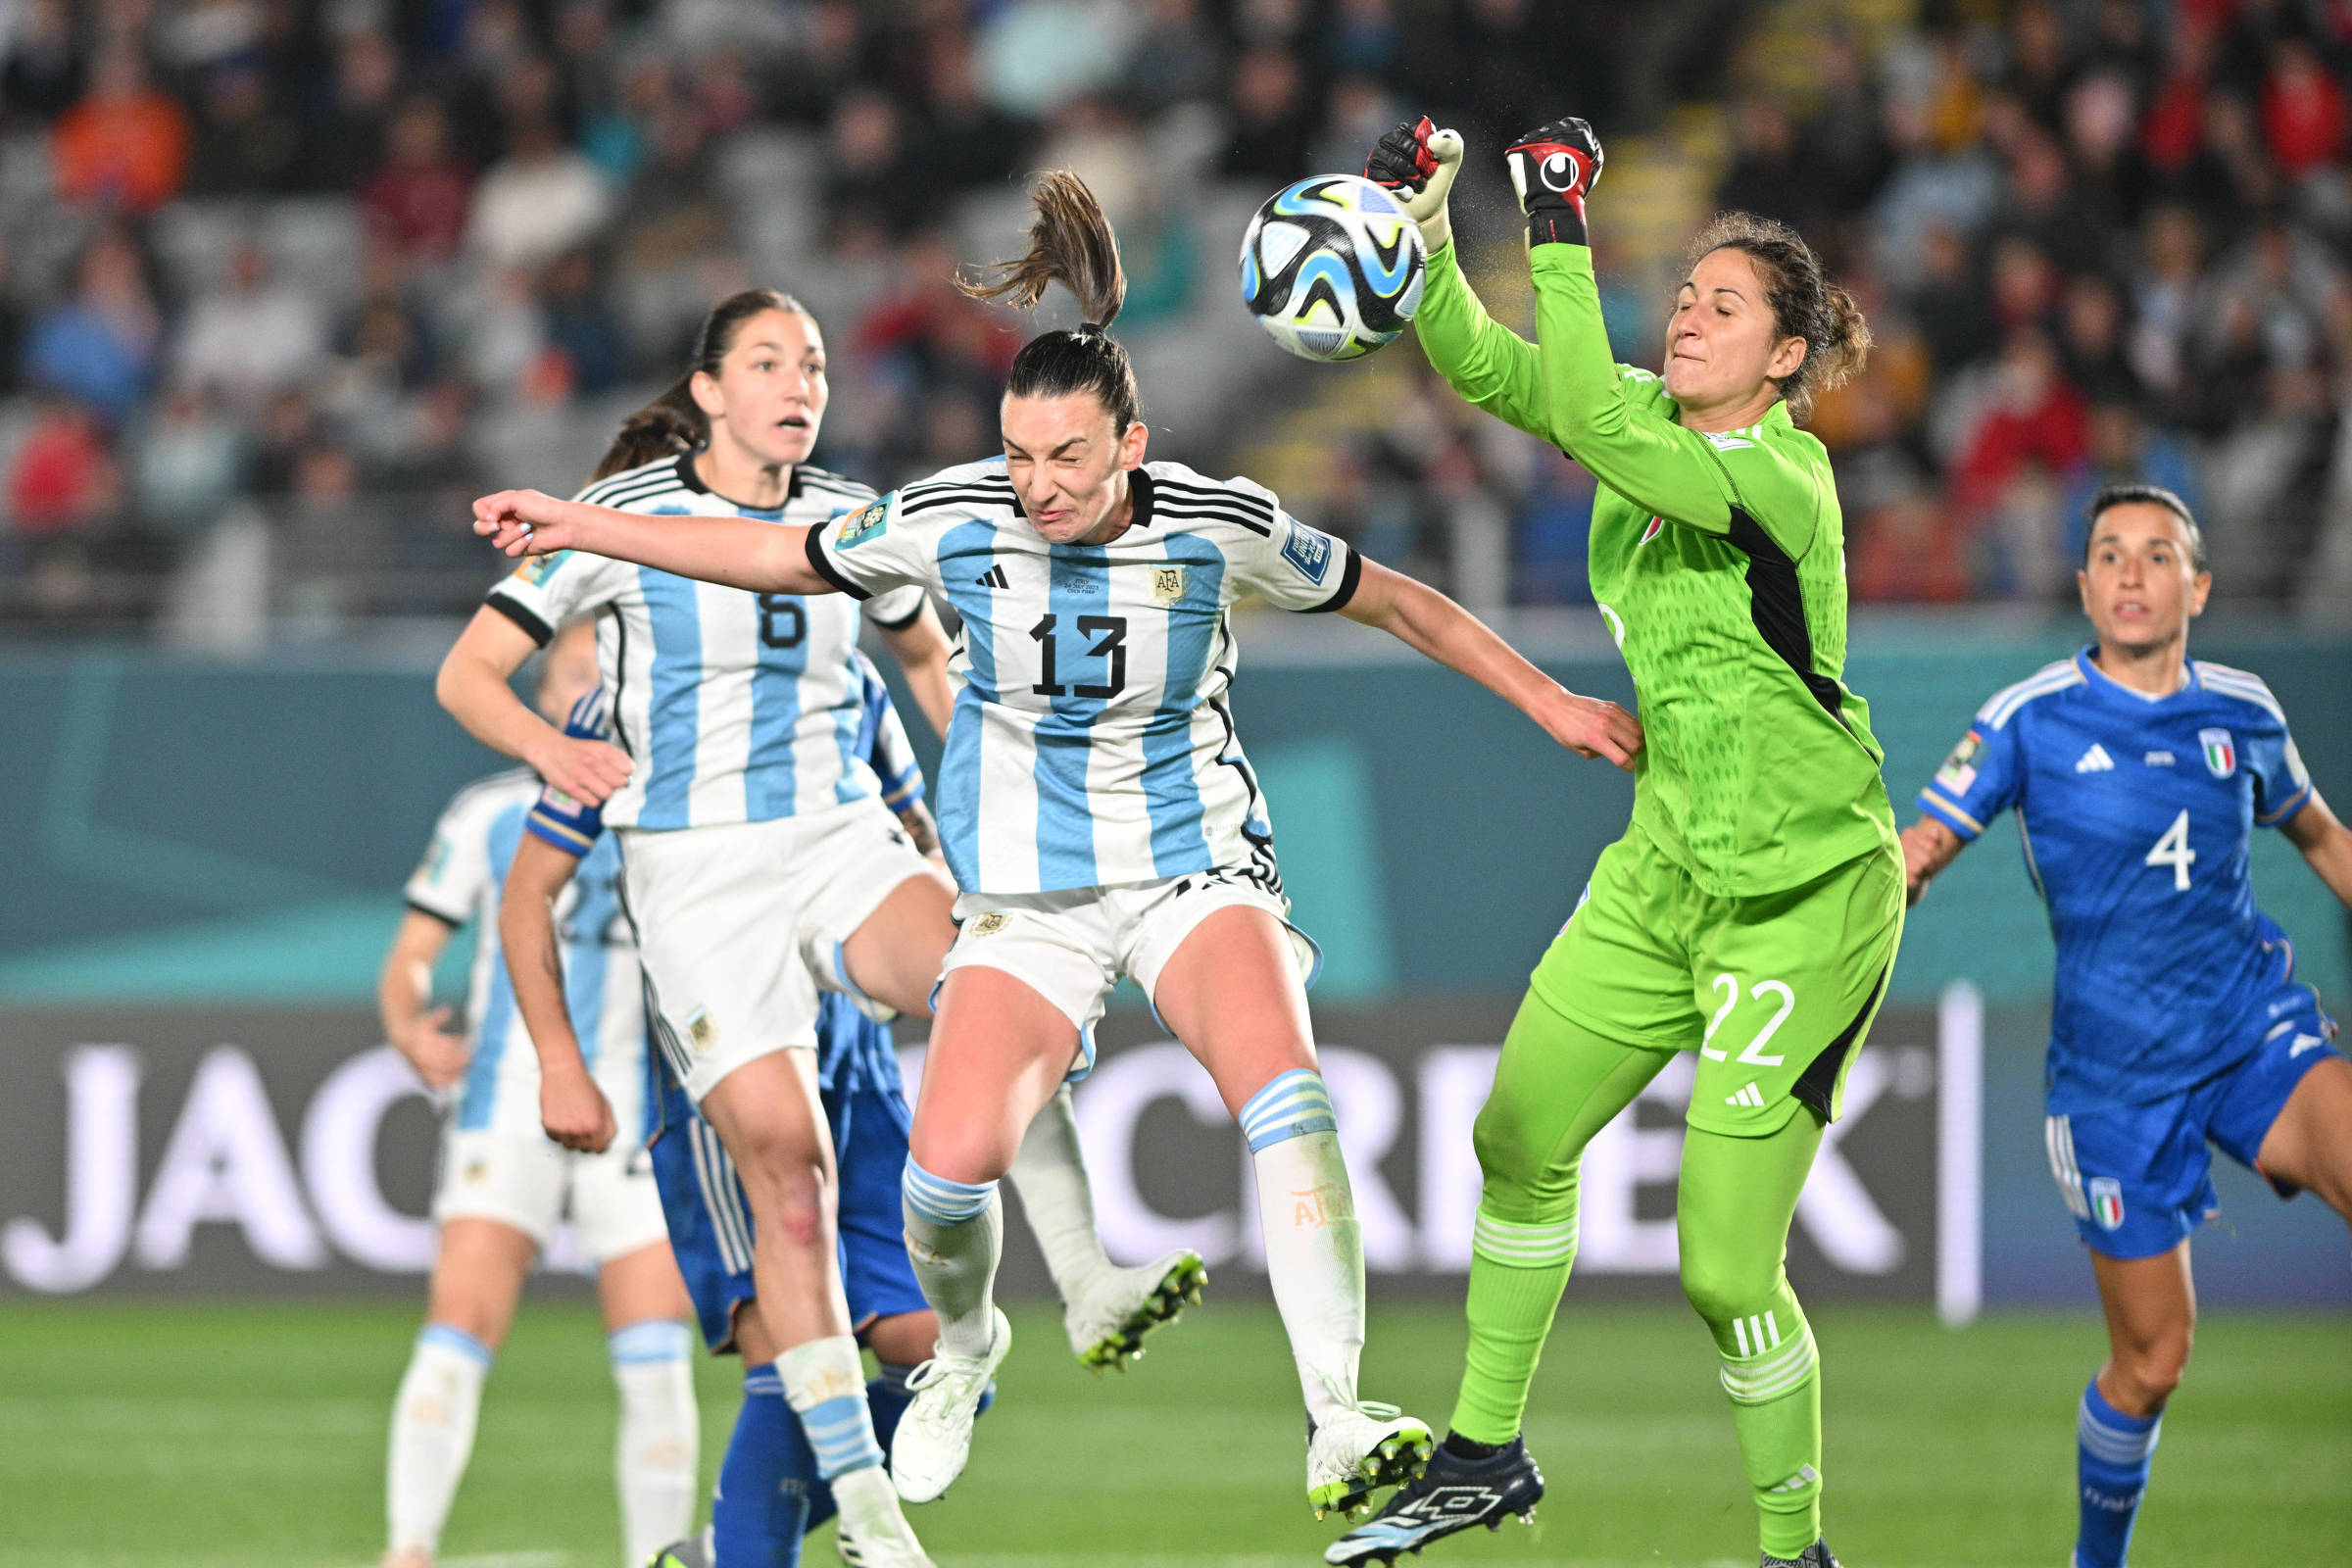 Copa do Mundo feminina será transmitida pela 1ª vez no Brasil